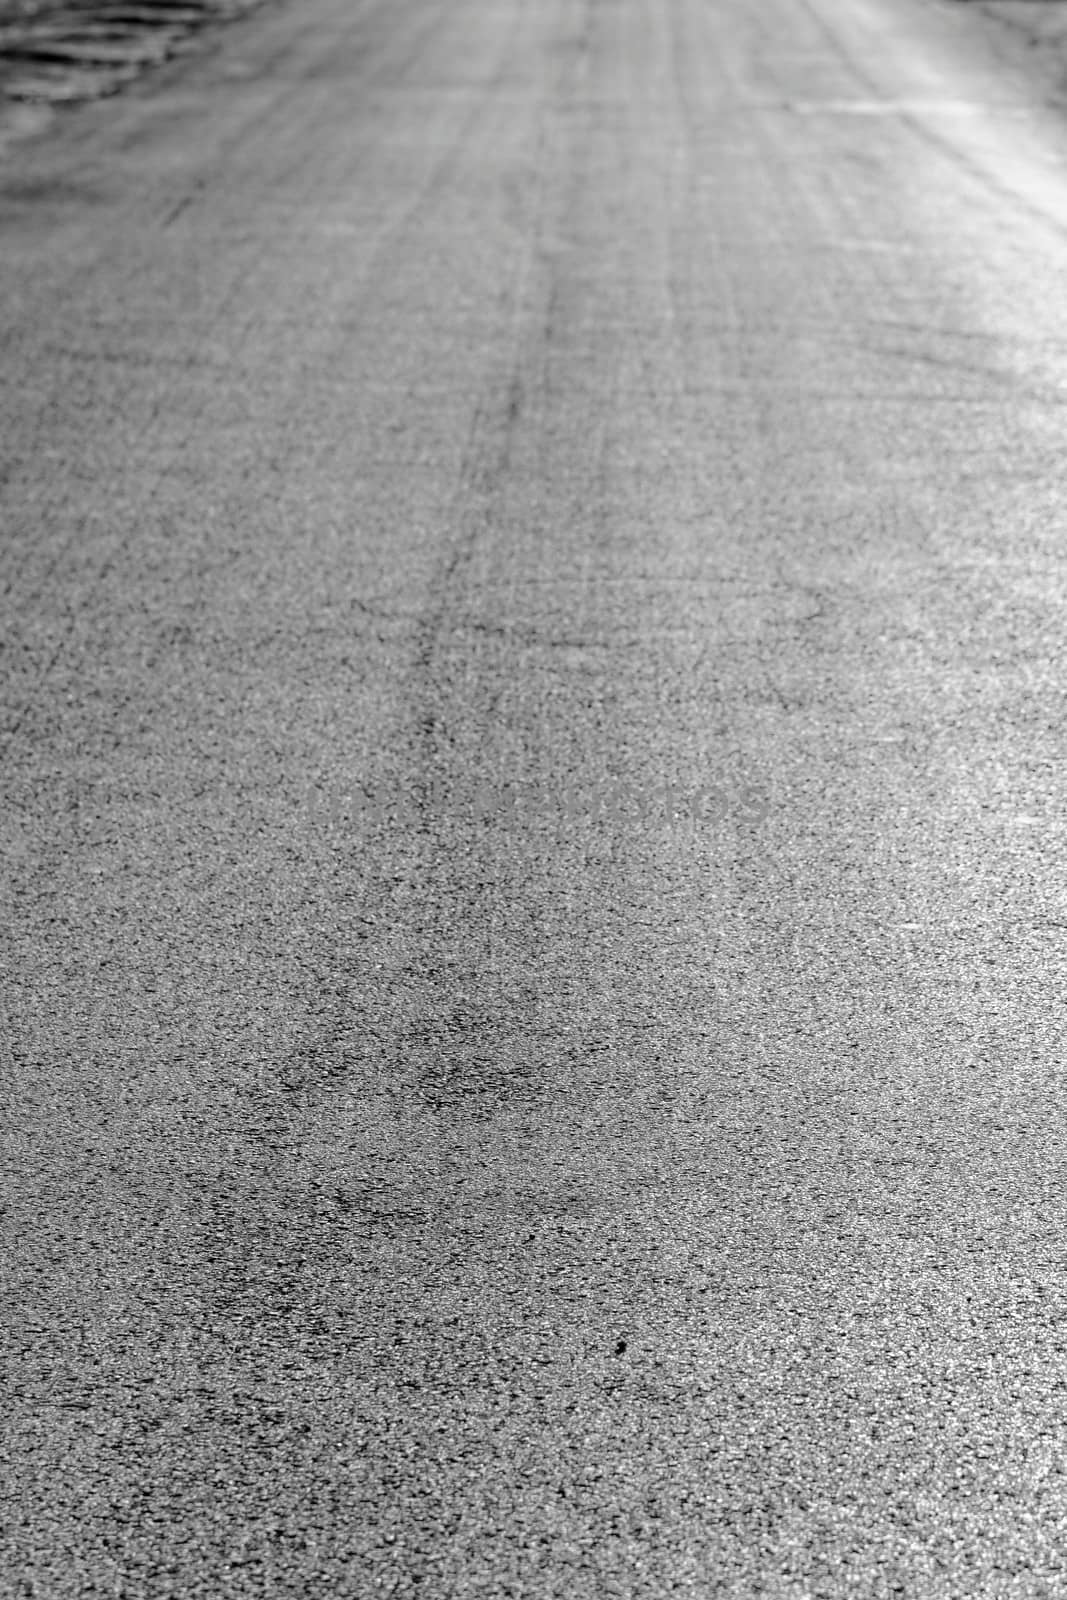 asphalt road by NagyDodo